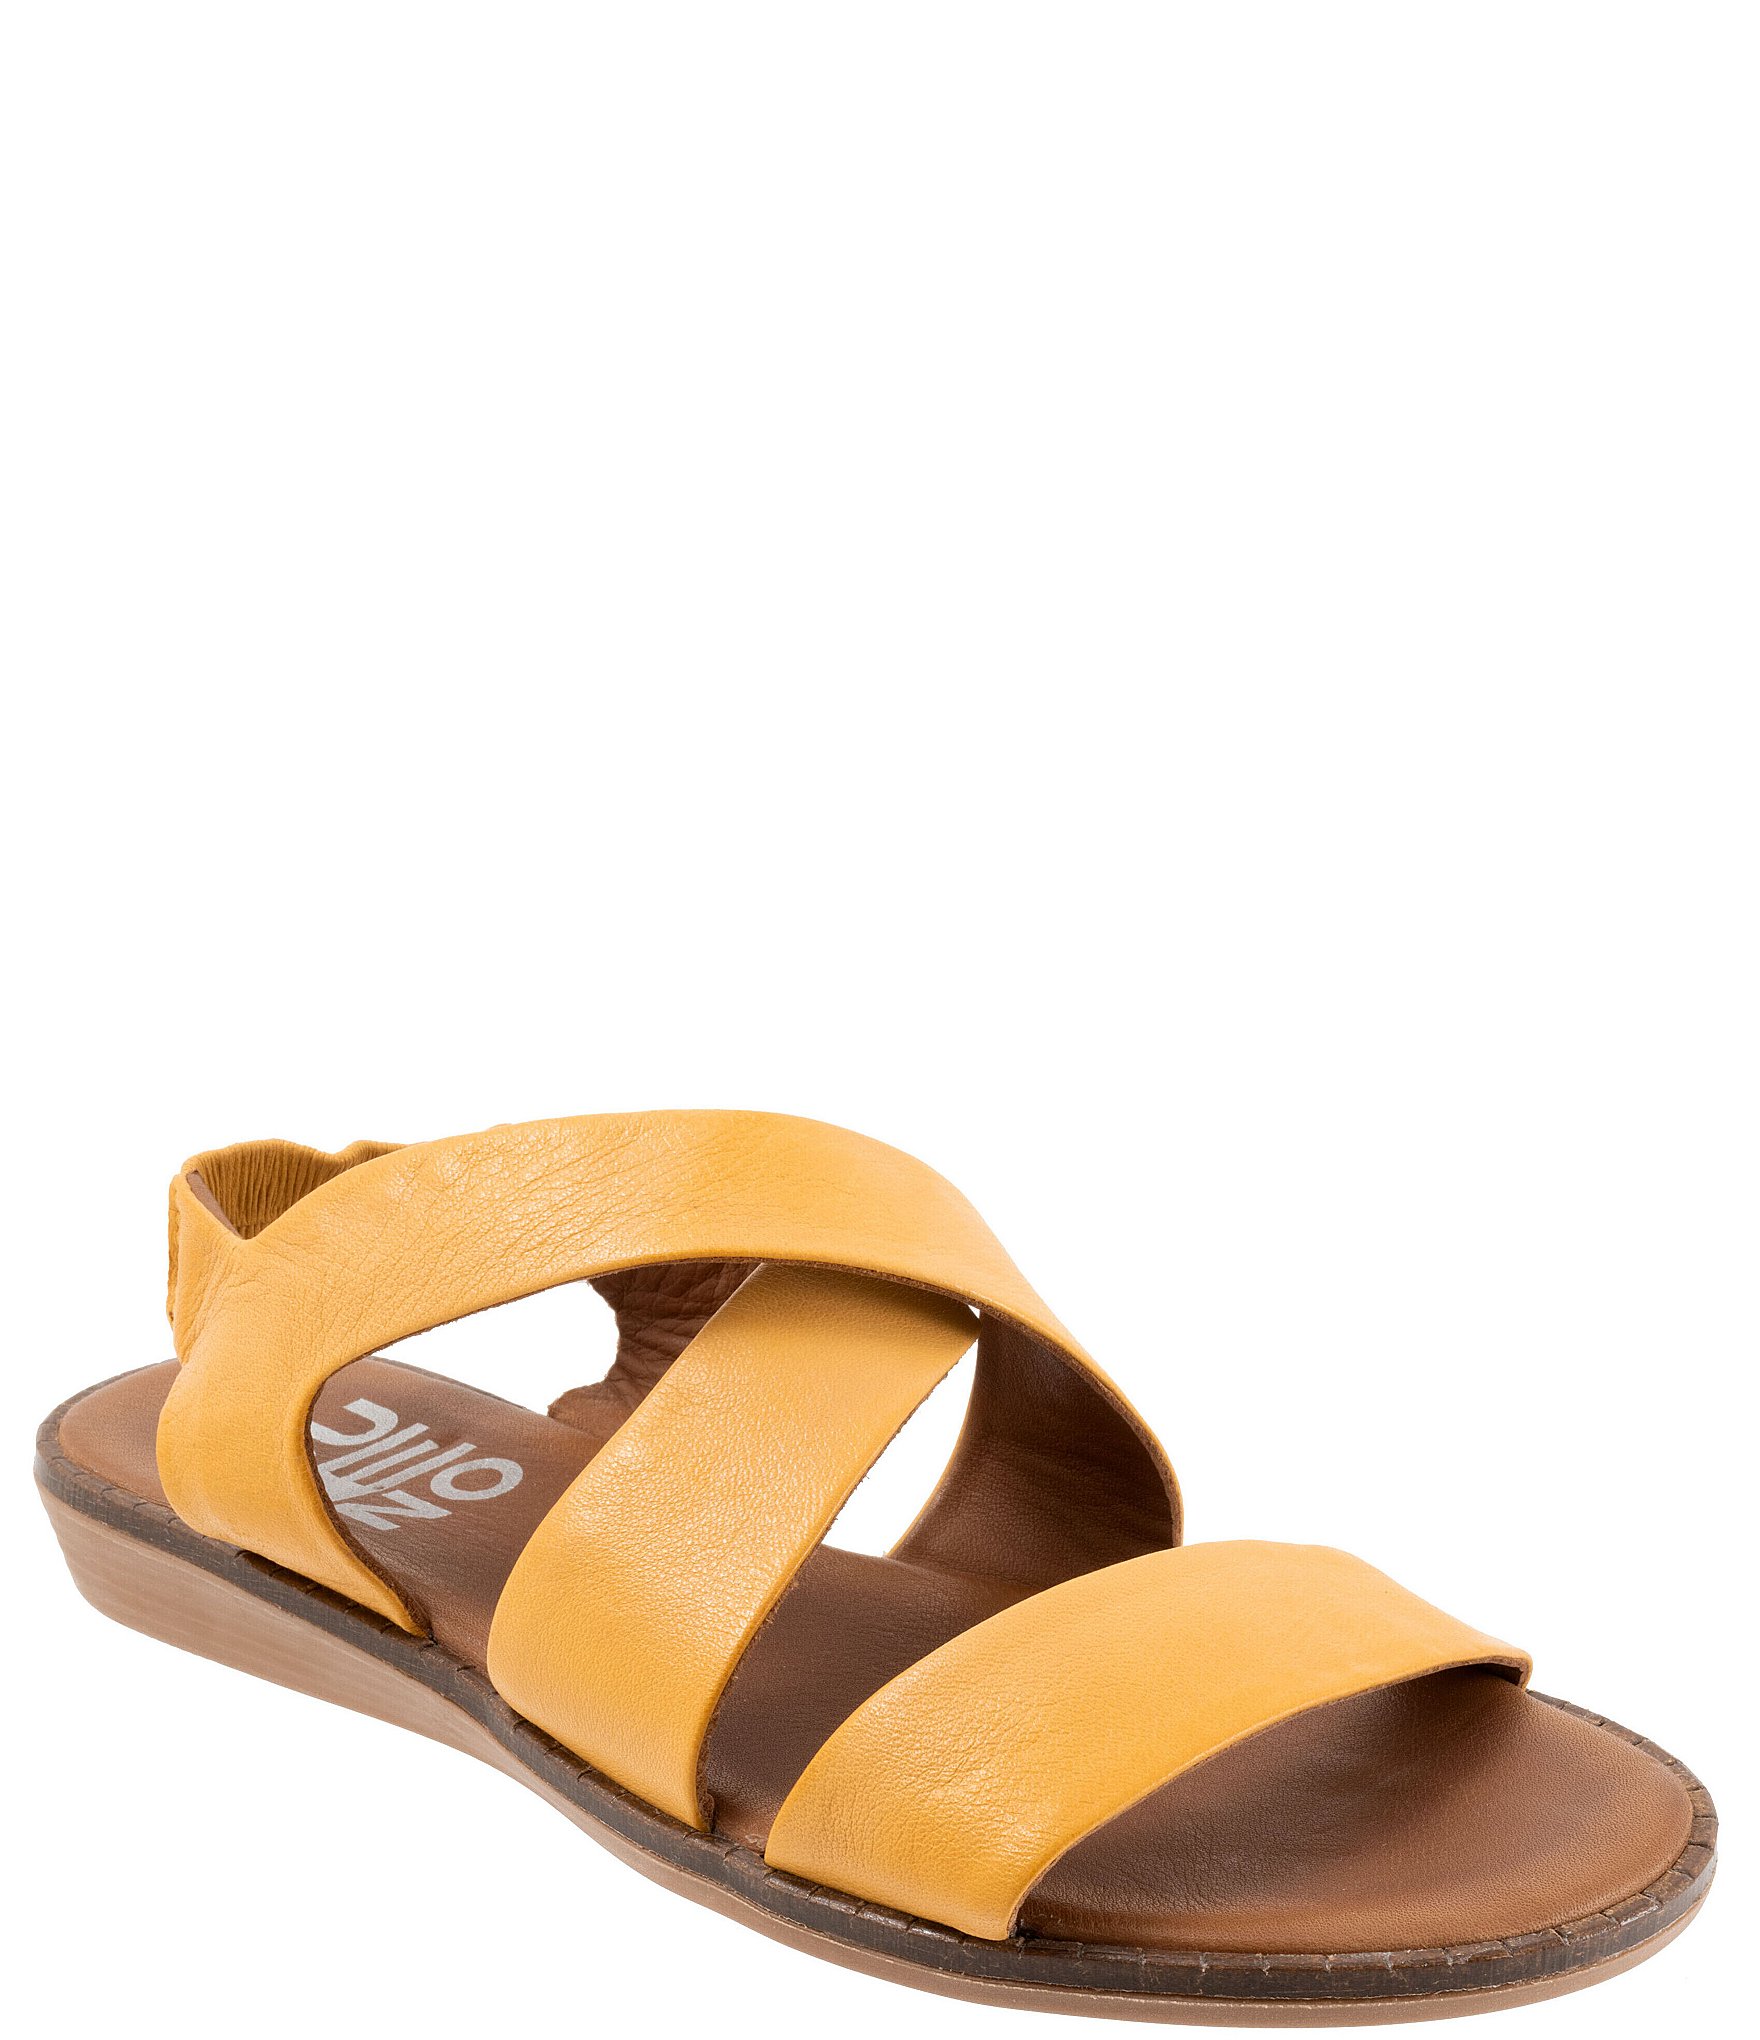 Vince Camuto Lemenda Leather Buckle Flat Slide Sandals - 5.5M